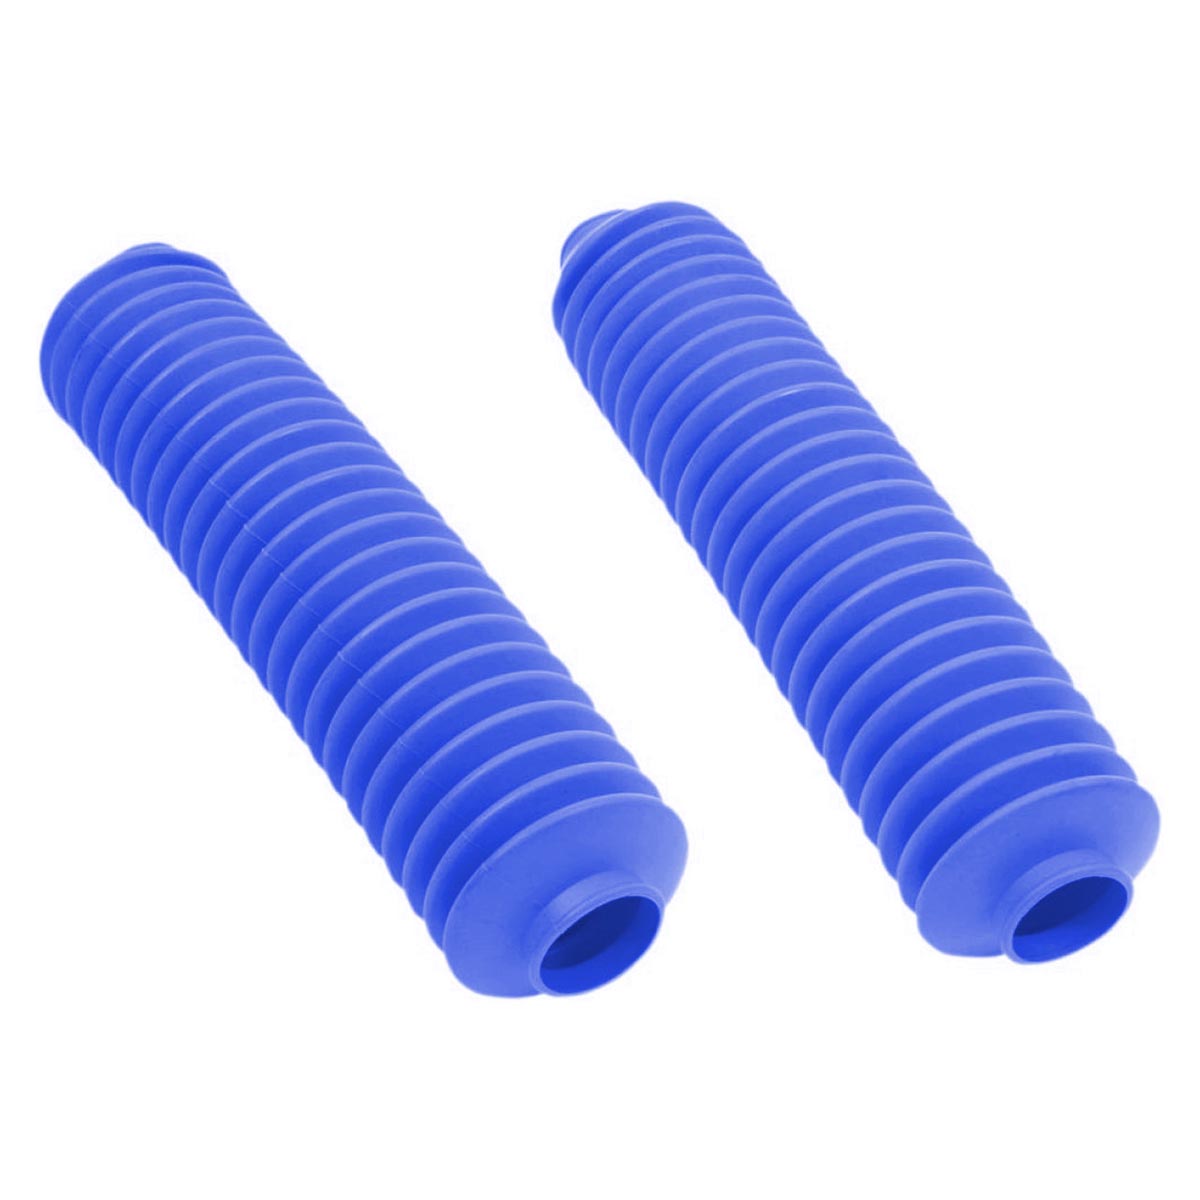 Zanbaline Soufflets de Fourche  33 cm travel, 40-48 mm upper, 50.8-63.5 mm lower, Royal Blue